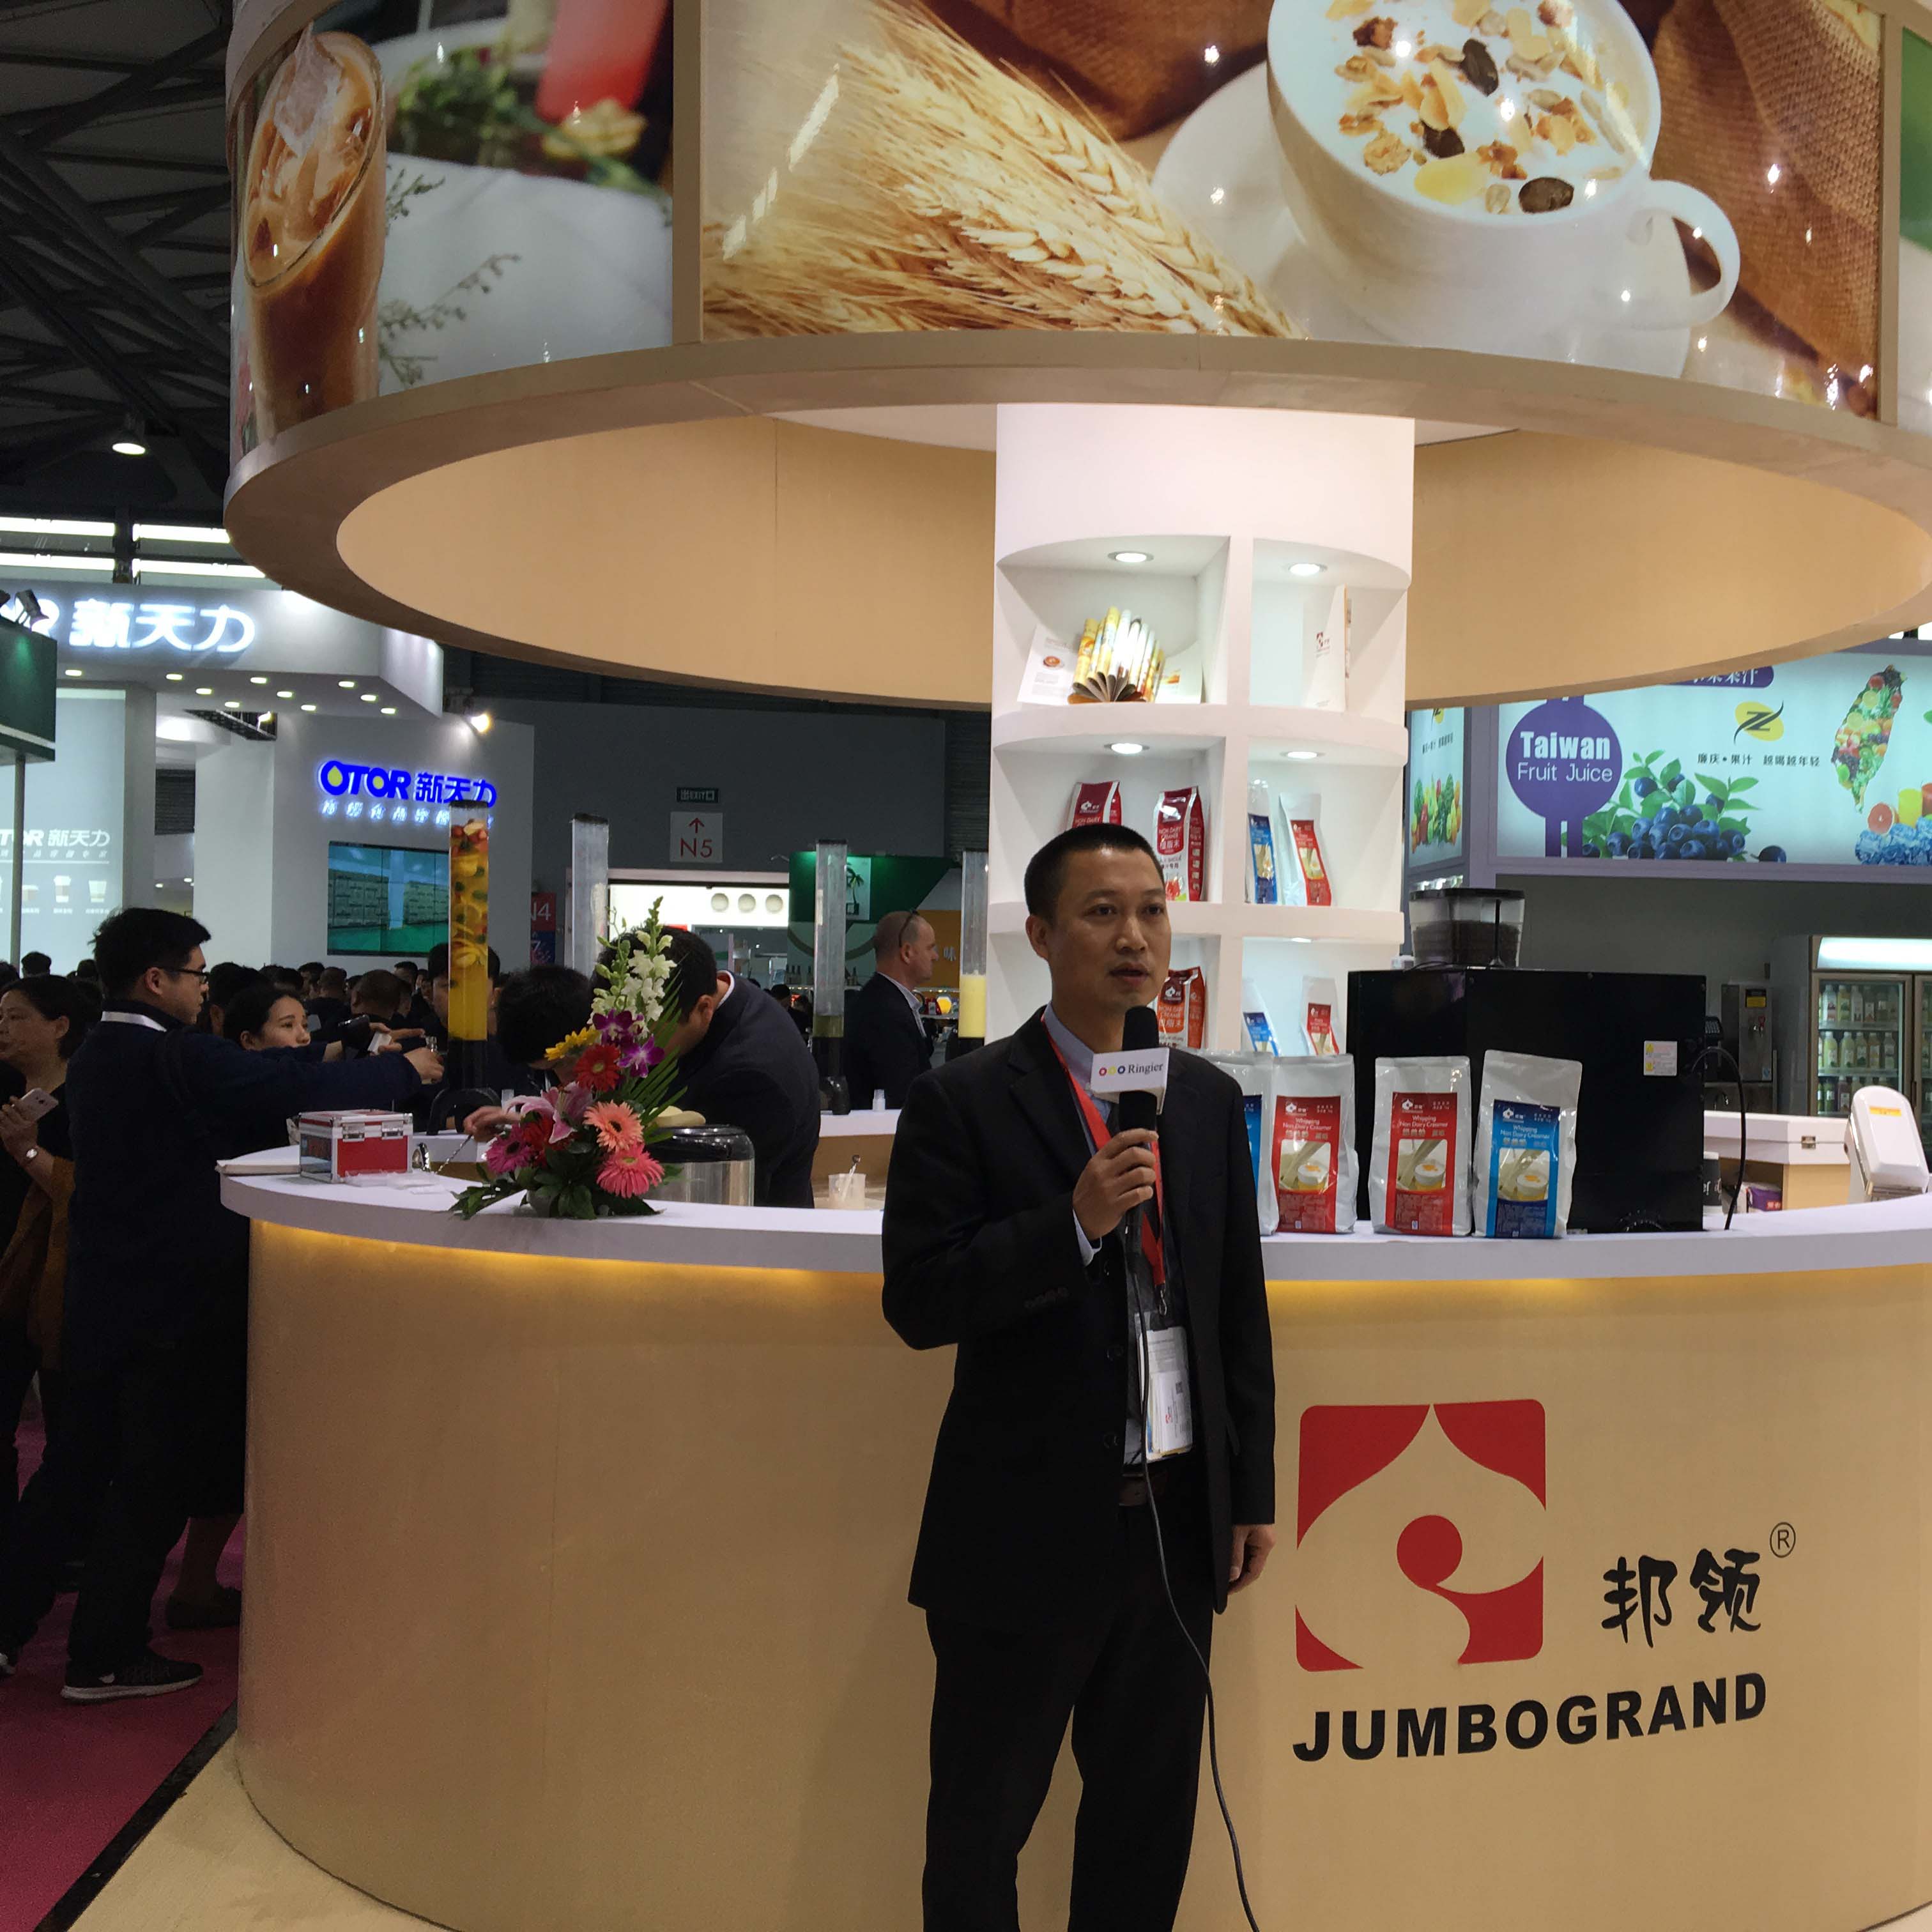 Jumbo Grand Food in 2017 Hotelx fine food exhibition in Shanghai